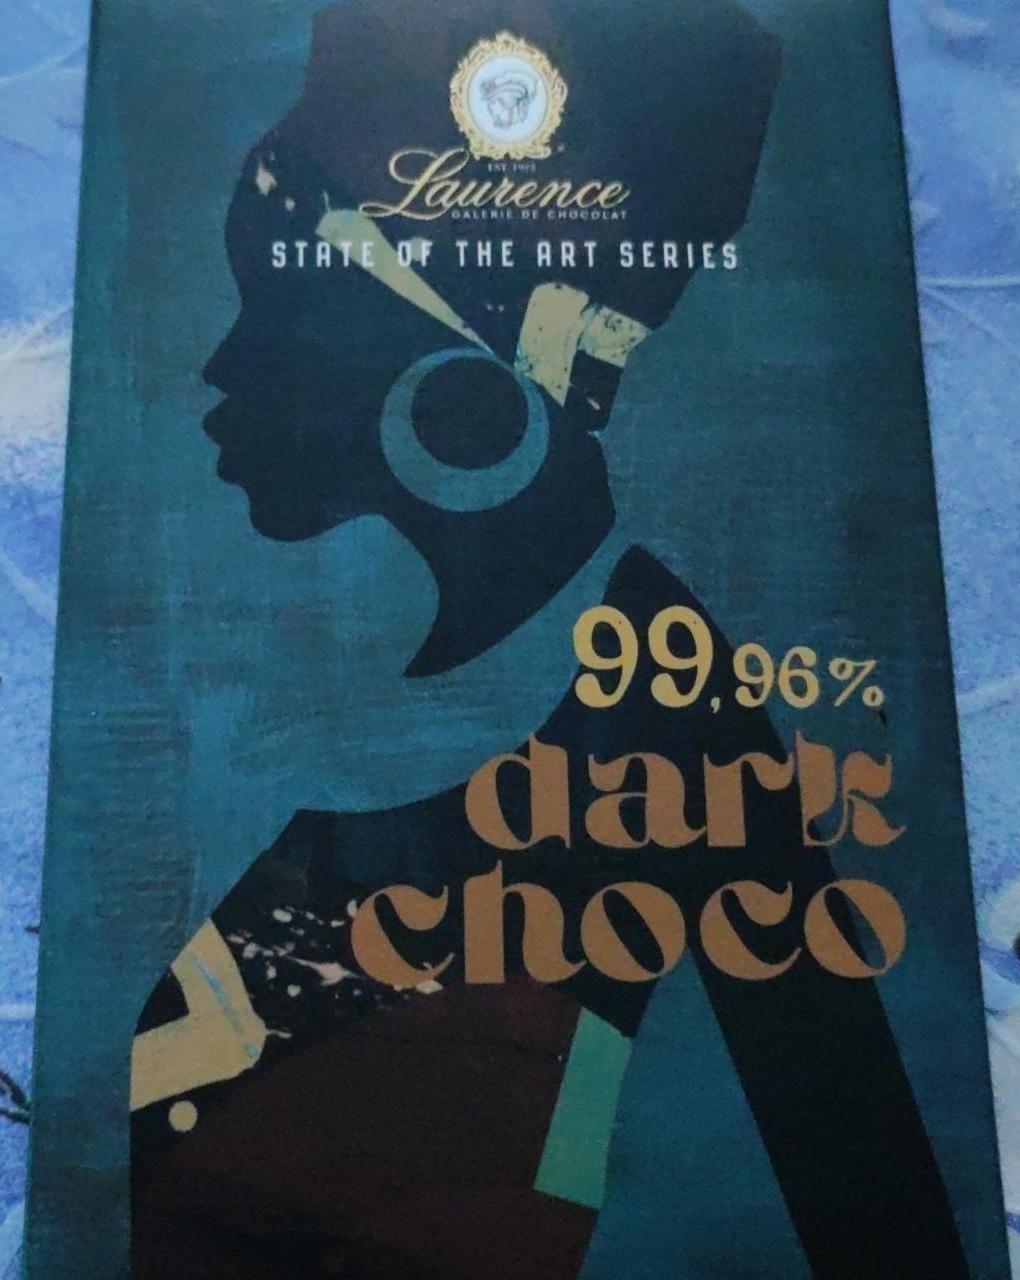 Fotografie - Dark choco 99,66% cacao Laurence